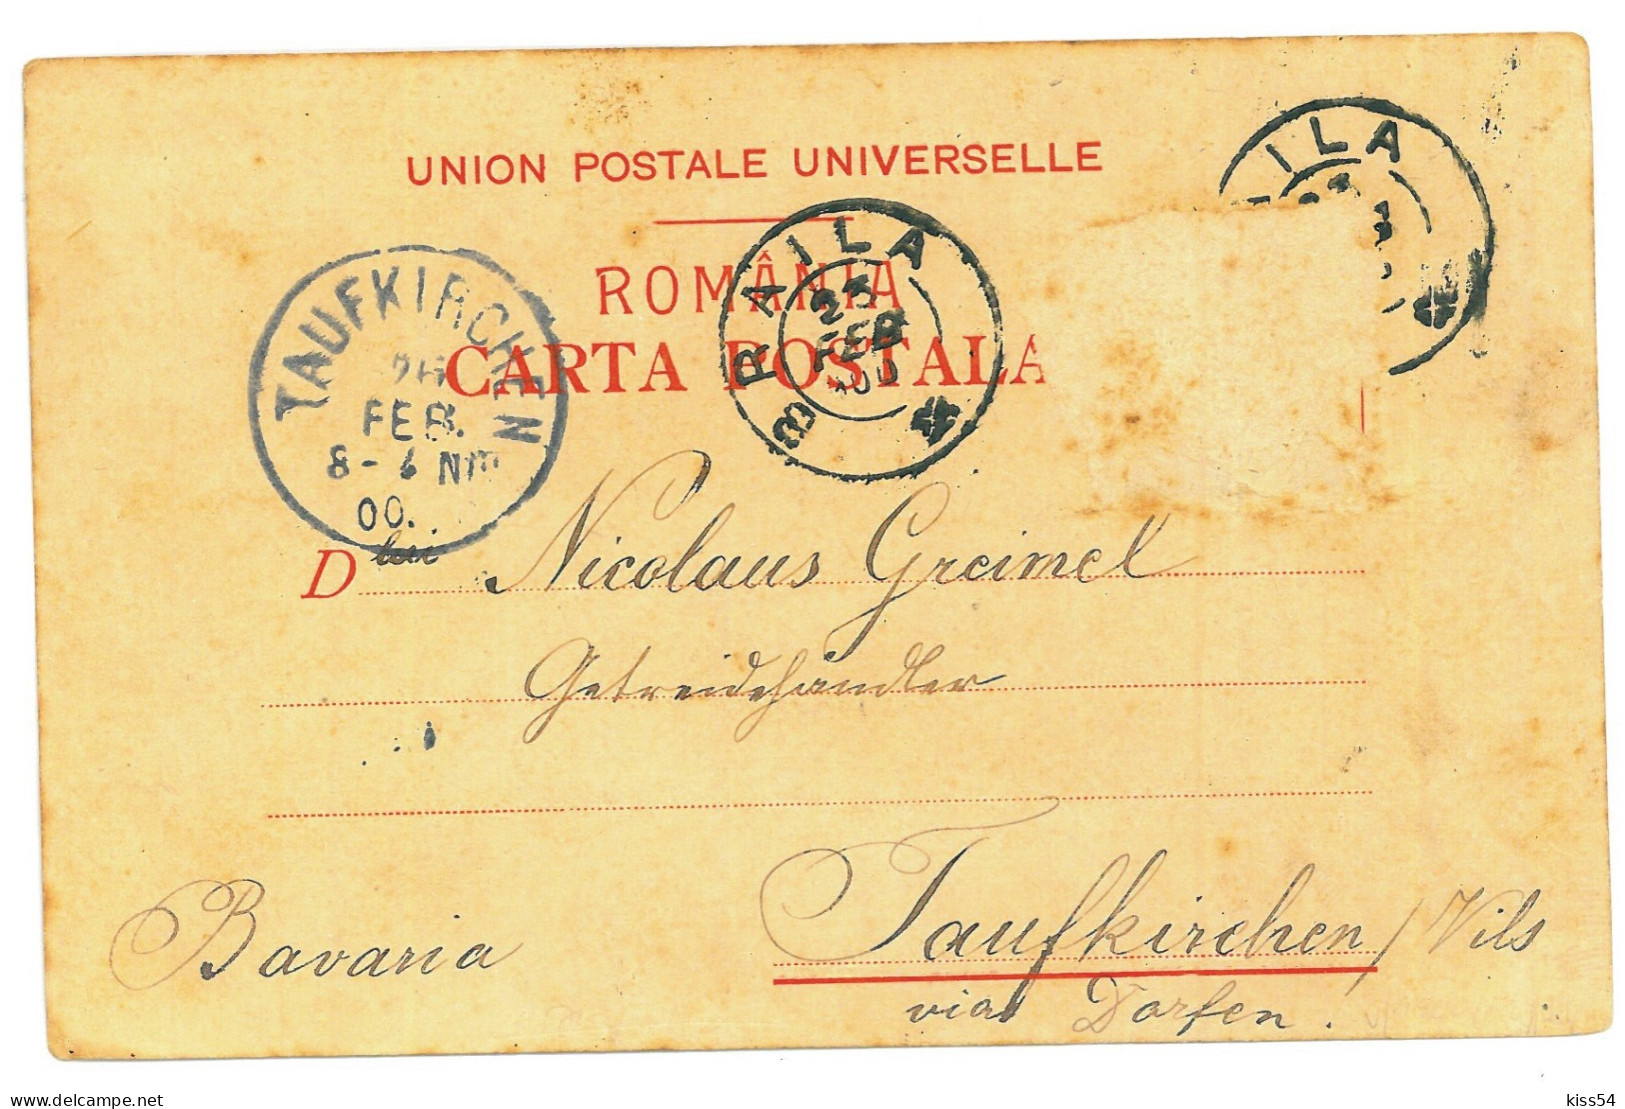 RO 83 - 20284 ETHNIC, Family, Litho, Romania - Old Postcard - Used - 1900 - Rumänien